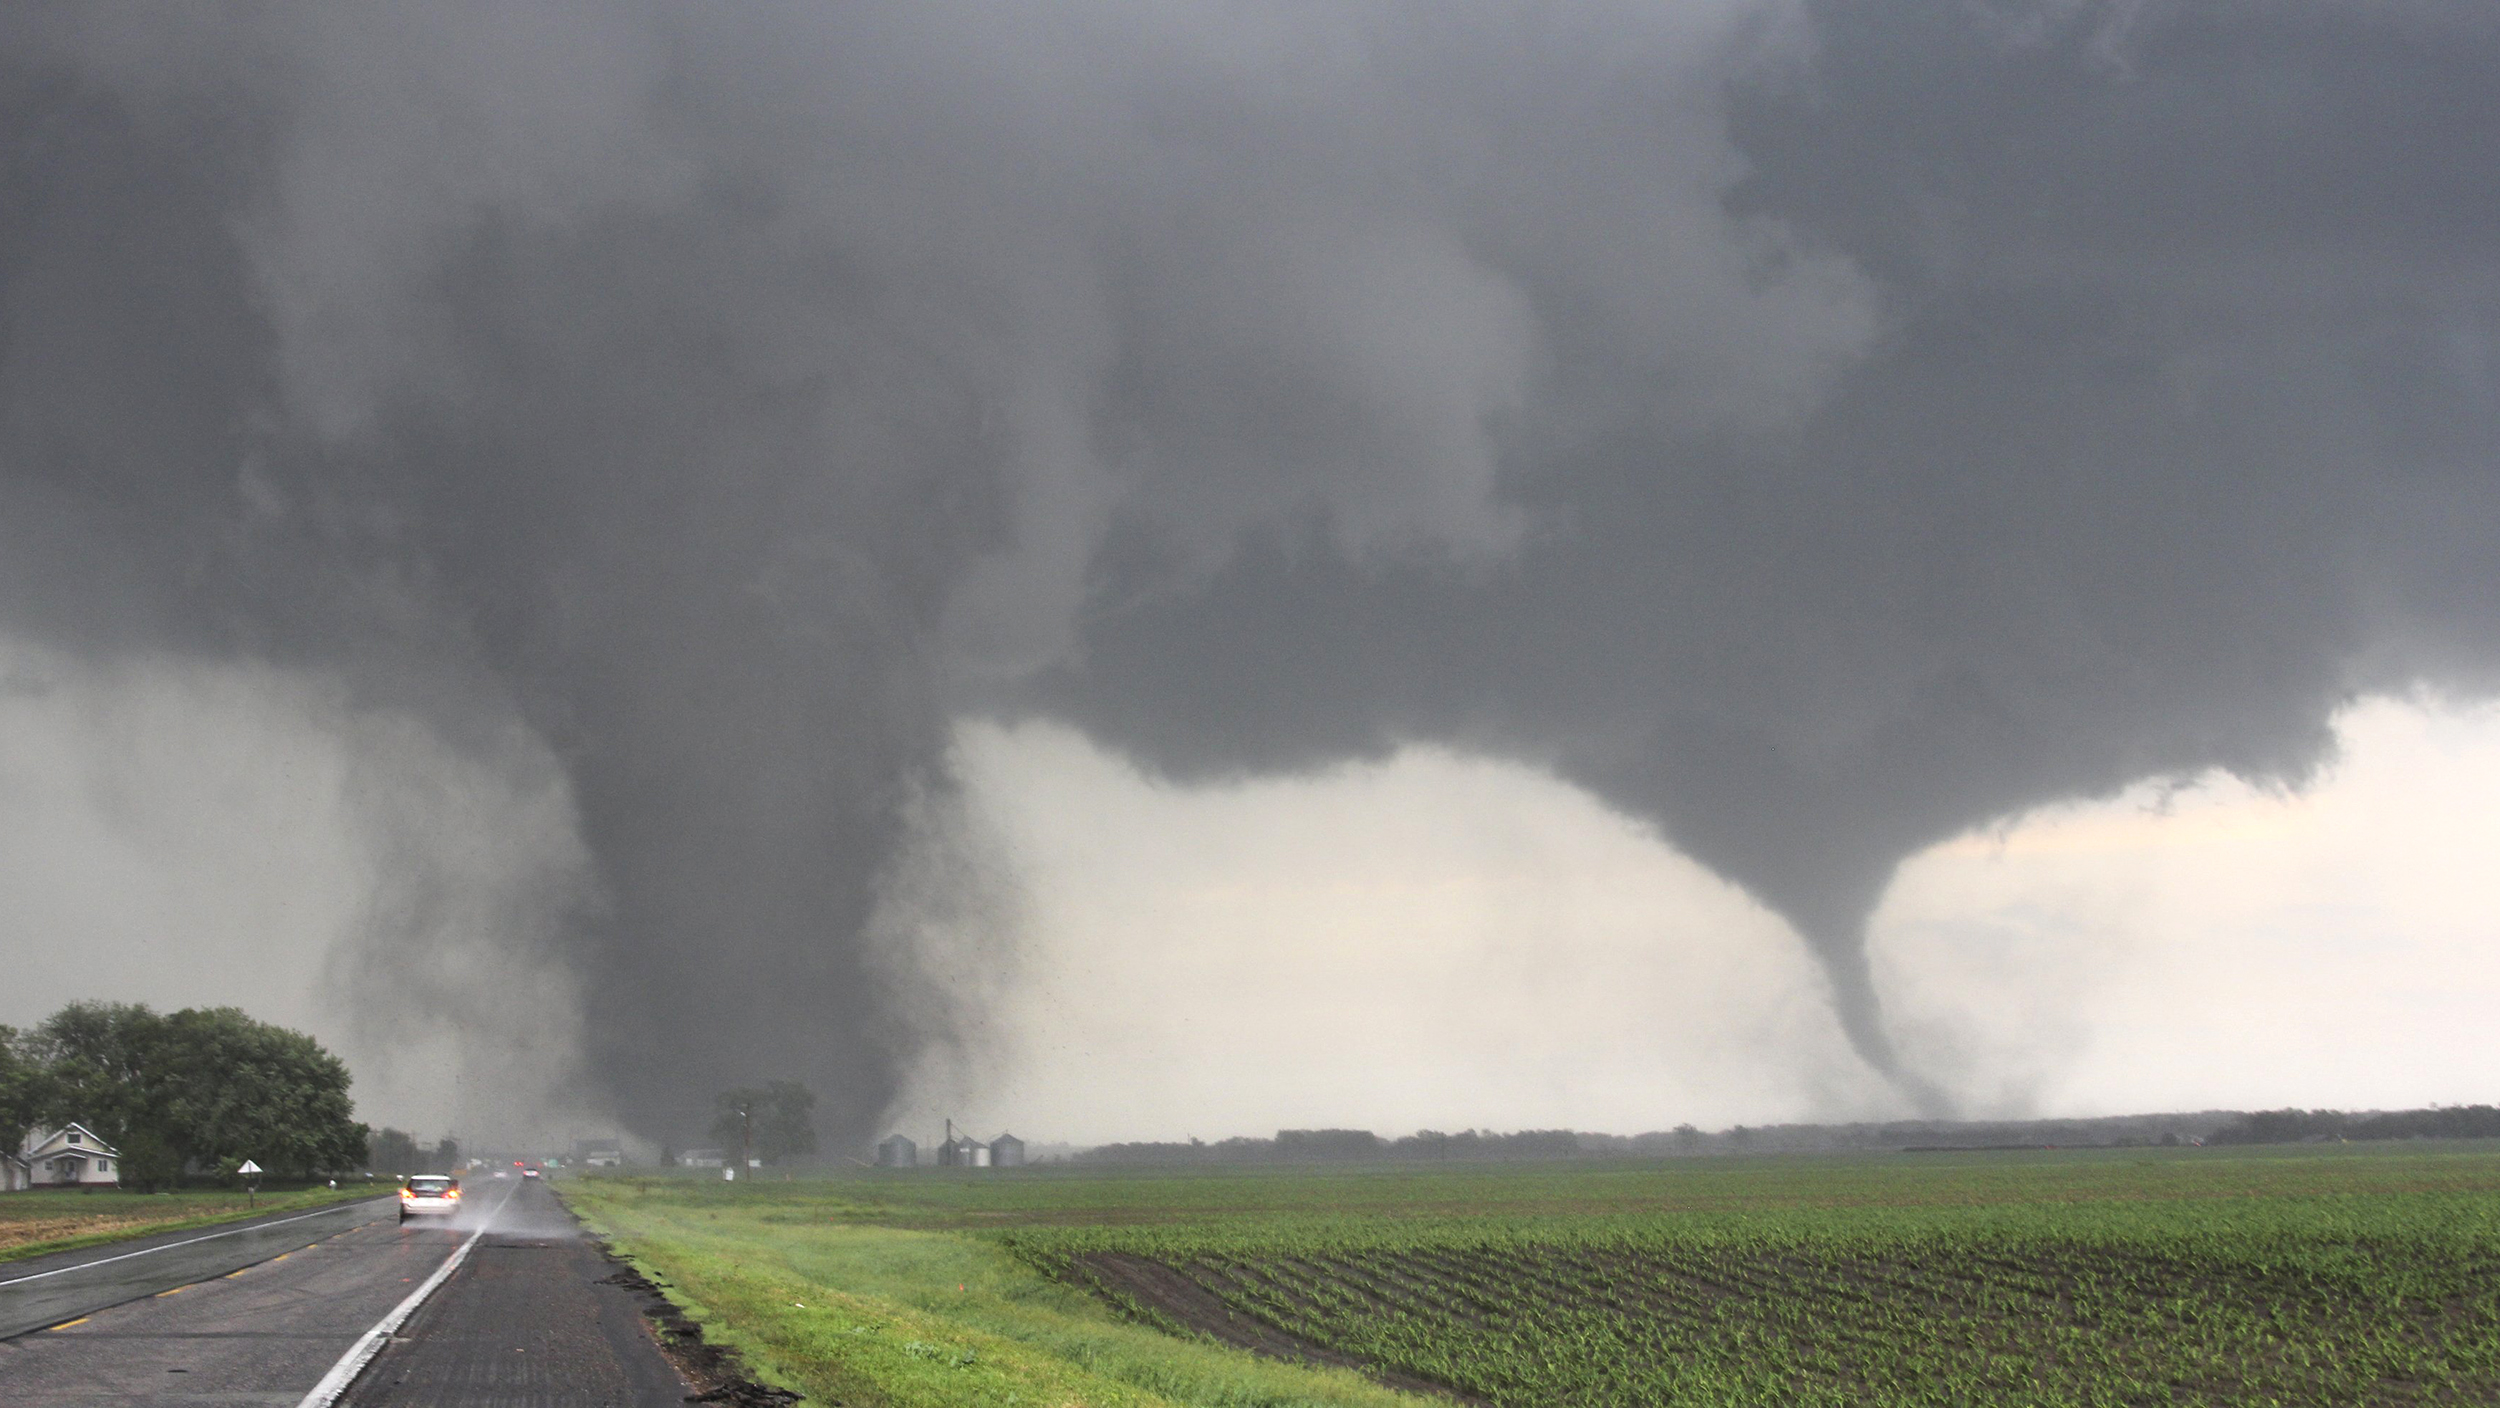 http://media1.s-nbcnews.com/i/streams/2014/June/140617/1D274906143116-today-nebraska-tornadoes-140617-02.jpg